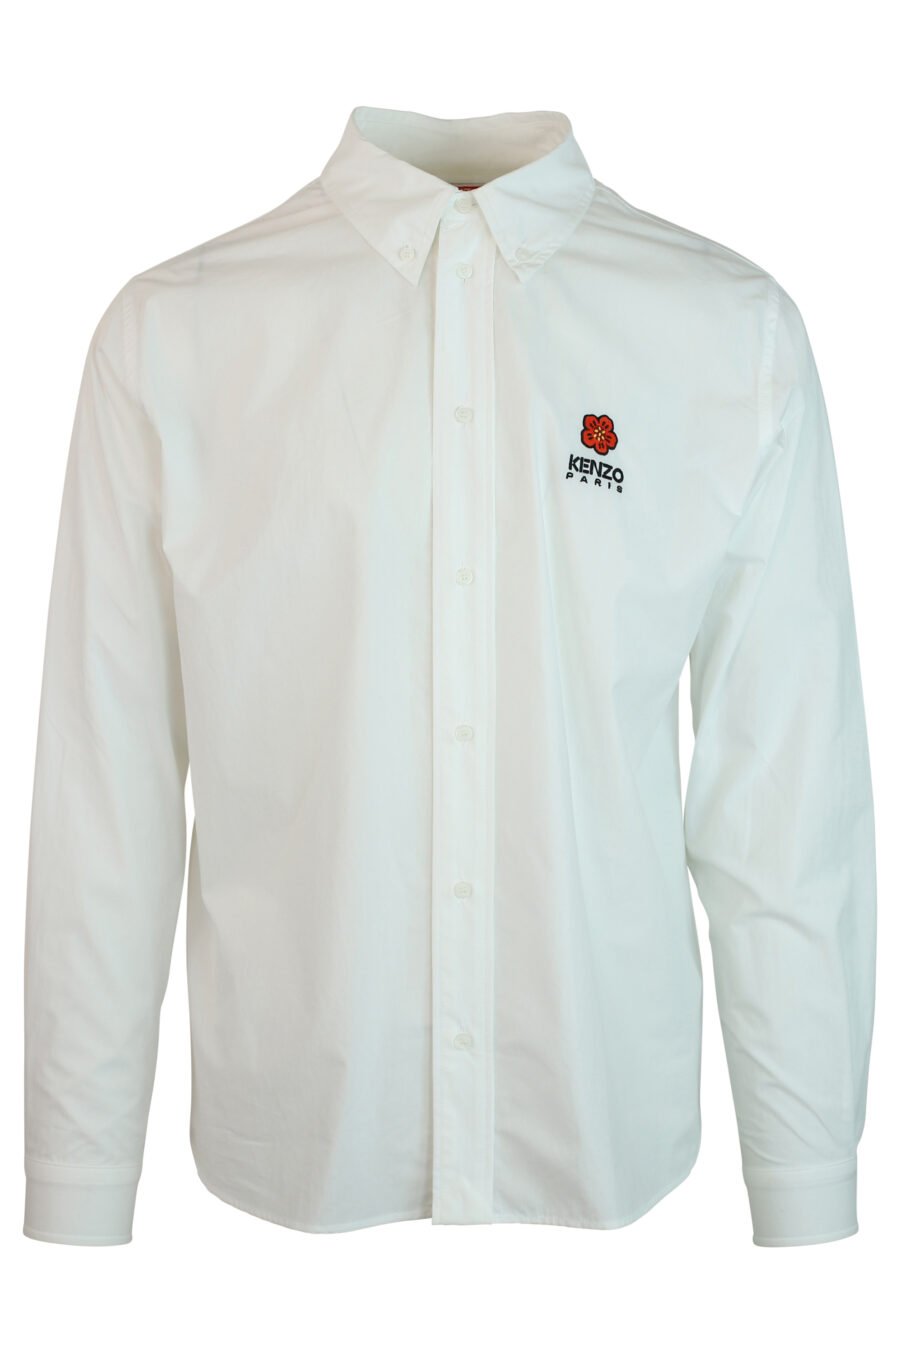 Camisa blanca con minilogo "boke flowers" - 3612230406605